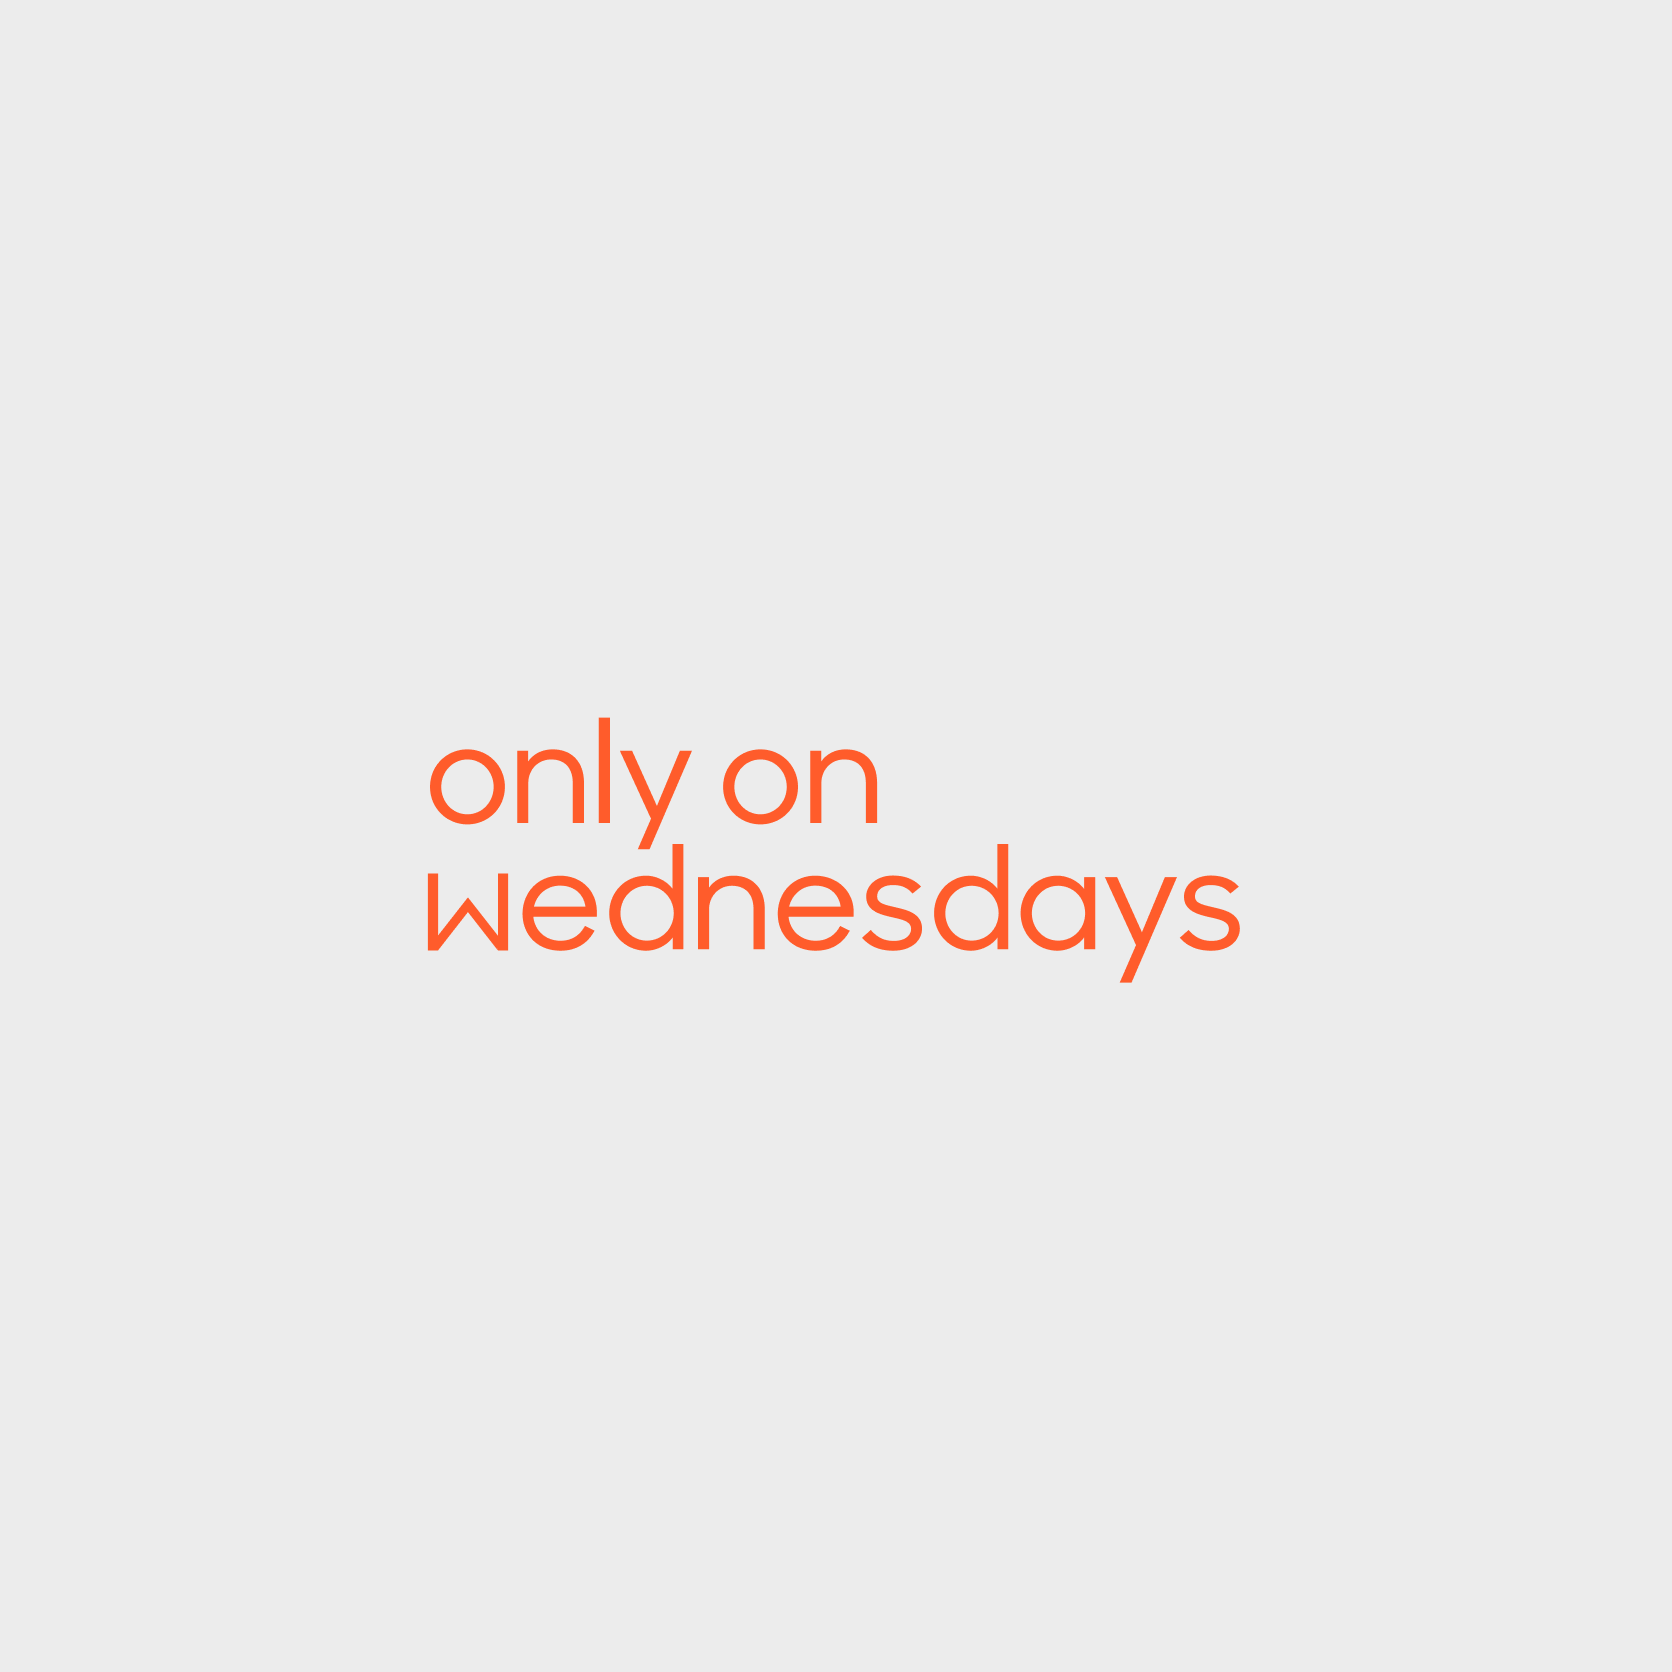 Only on Wednesdays typeface in orange on light grey background